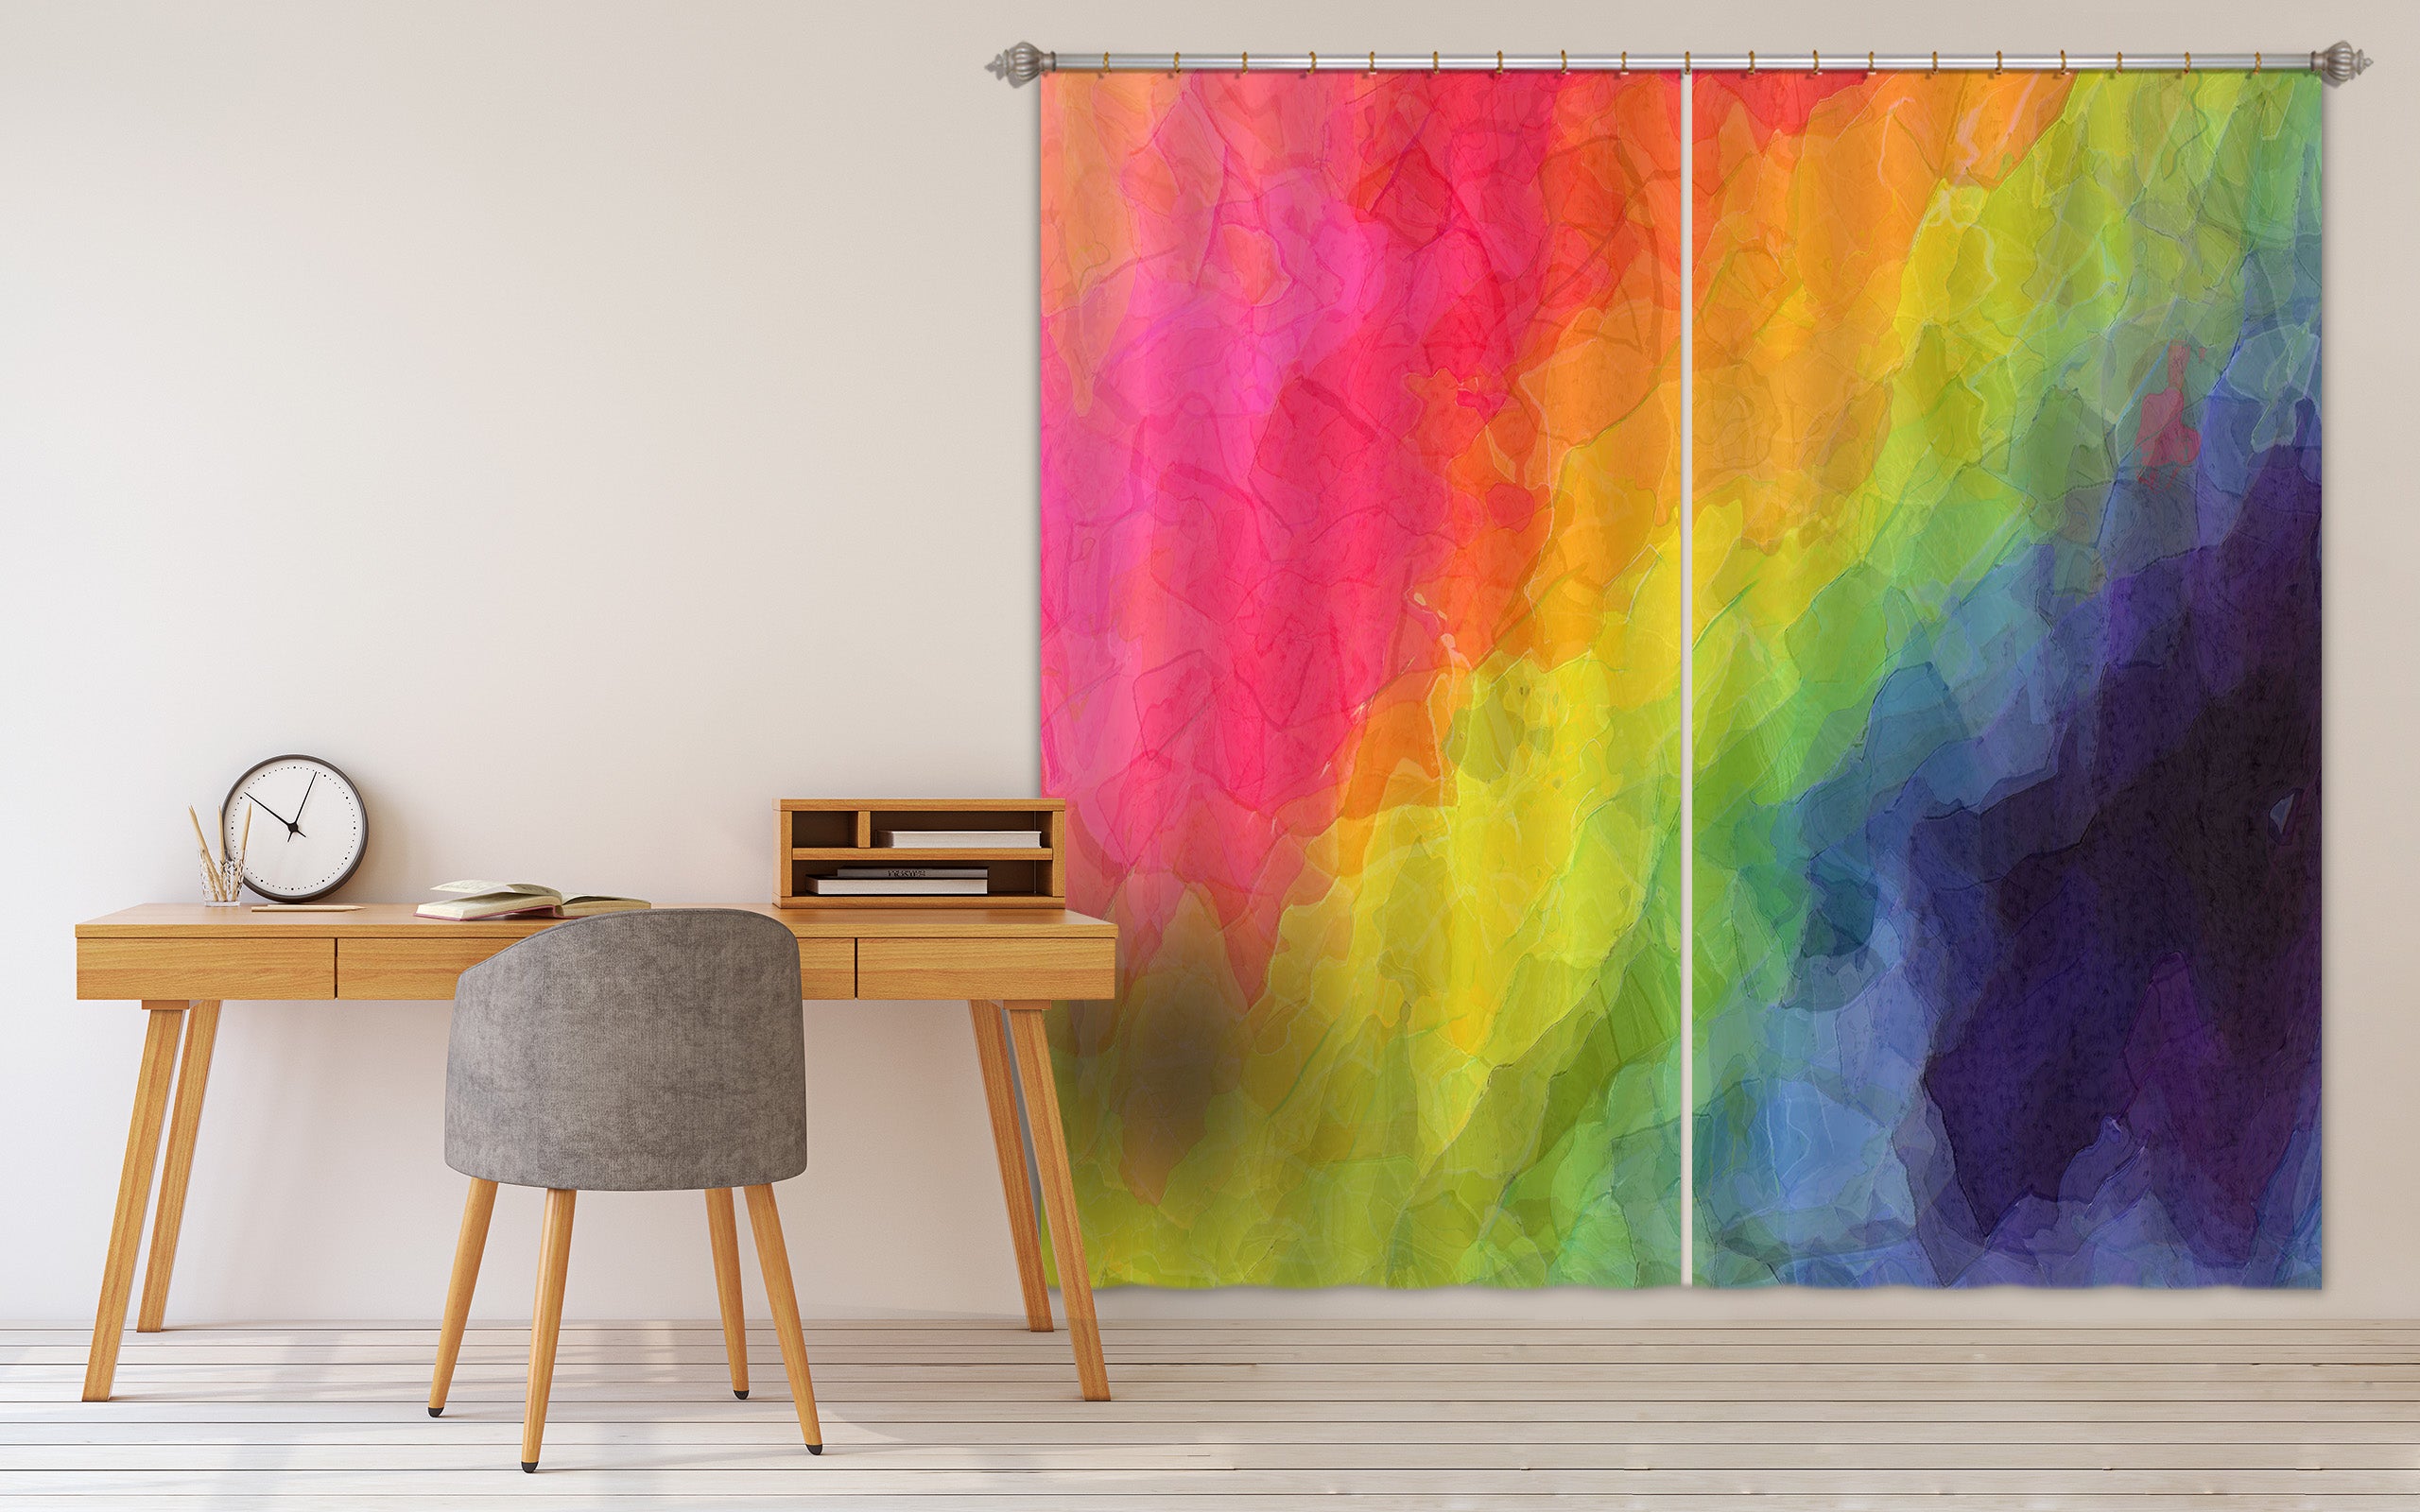 3D Painted Rainbow 047 Shandra Smith Curtain Curtains Drapes